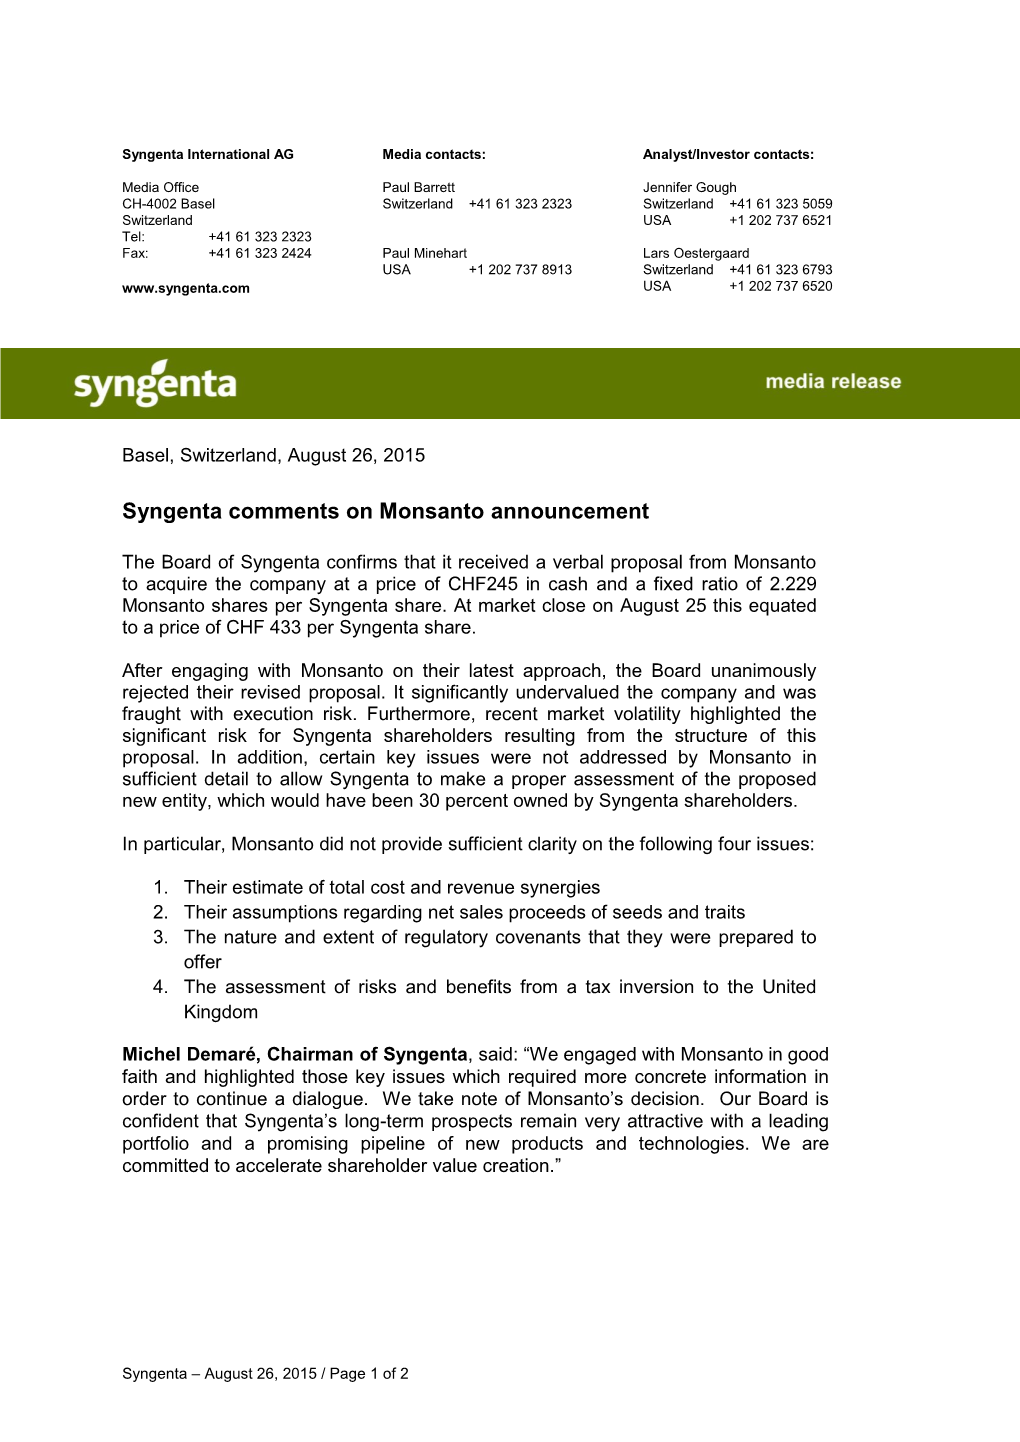 Syngenta Comments on Monsanto Announcement